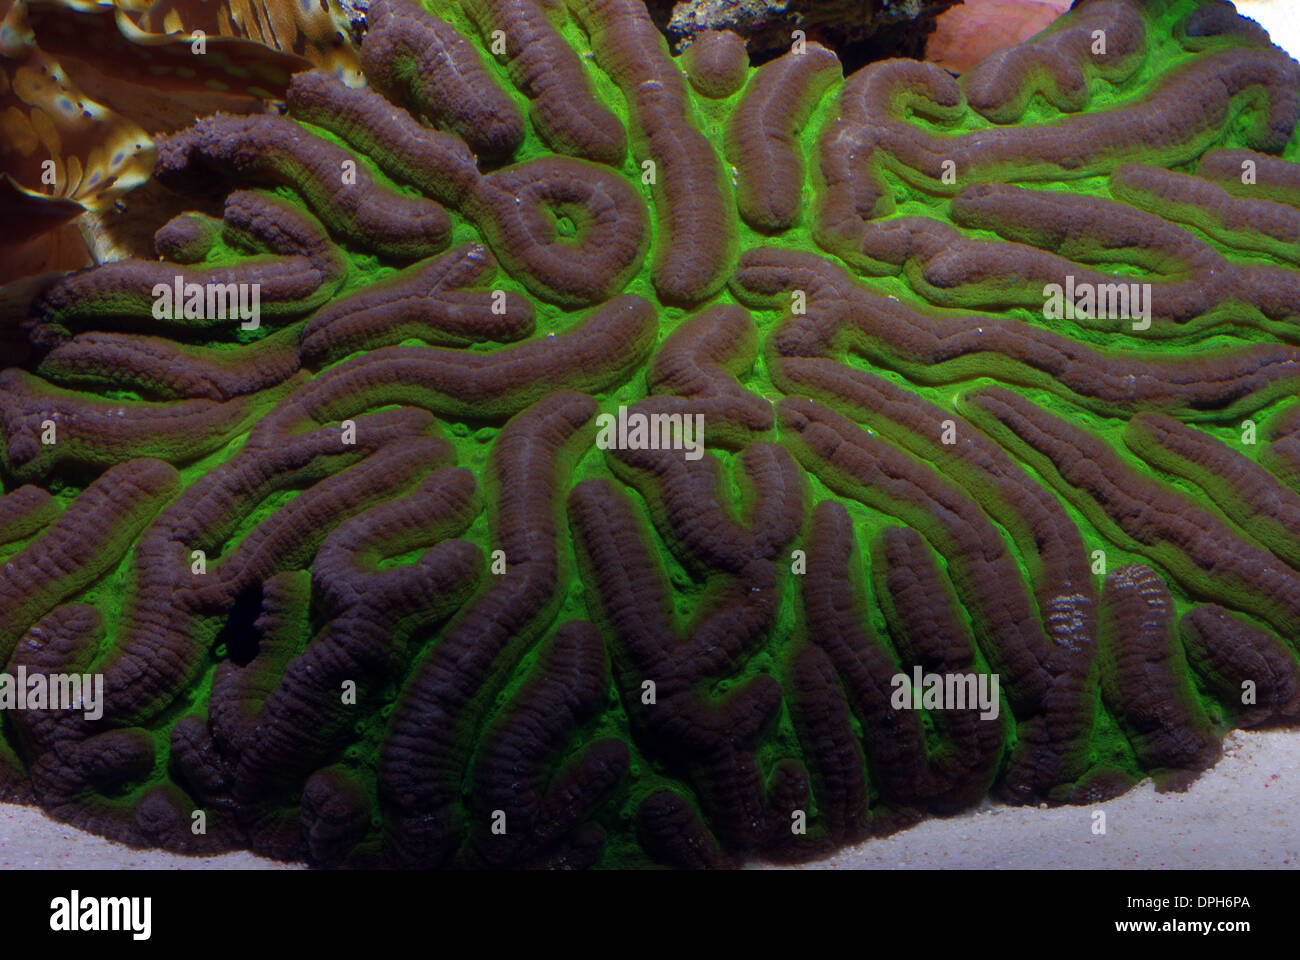 Brain or Lesser valley coral (Platygyra daedalea) Stock Photo